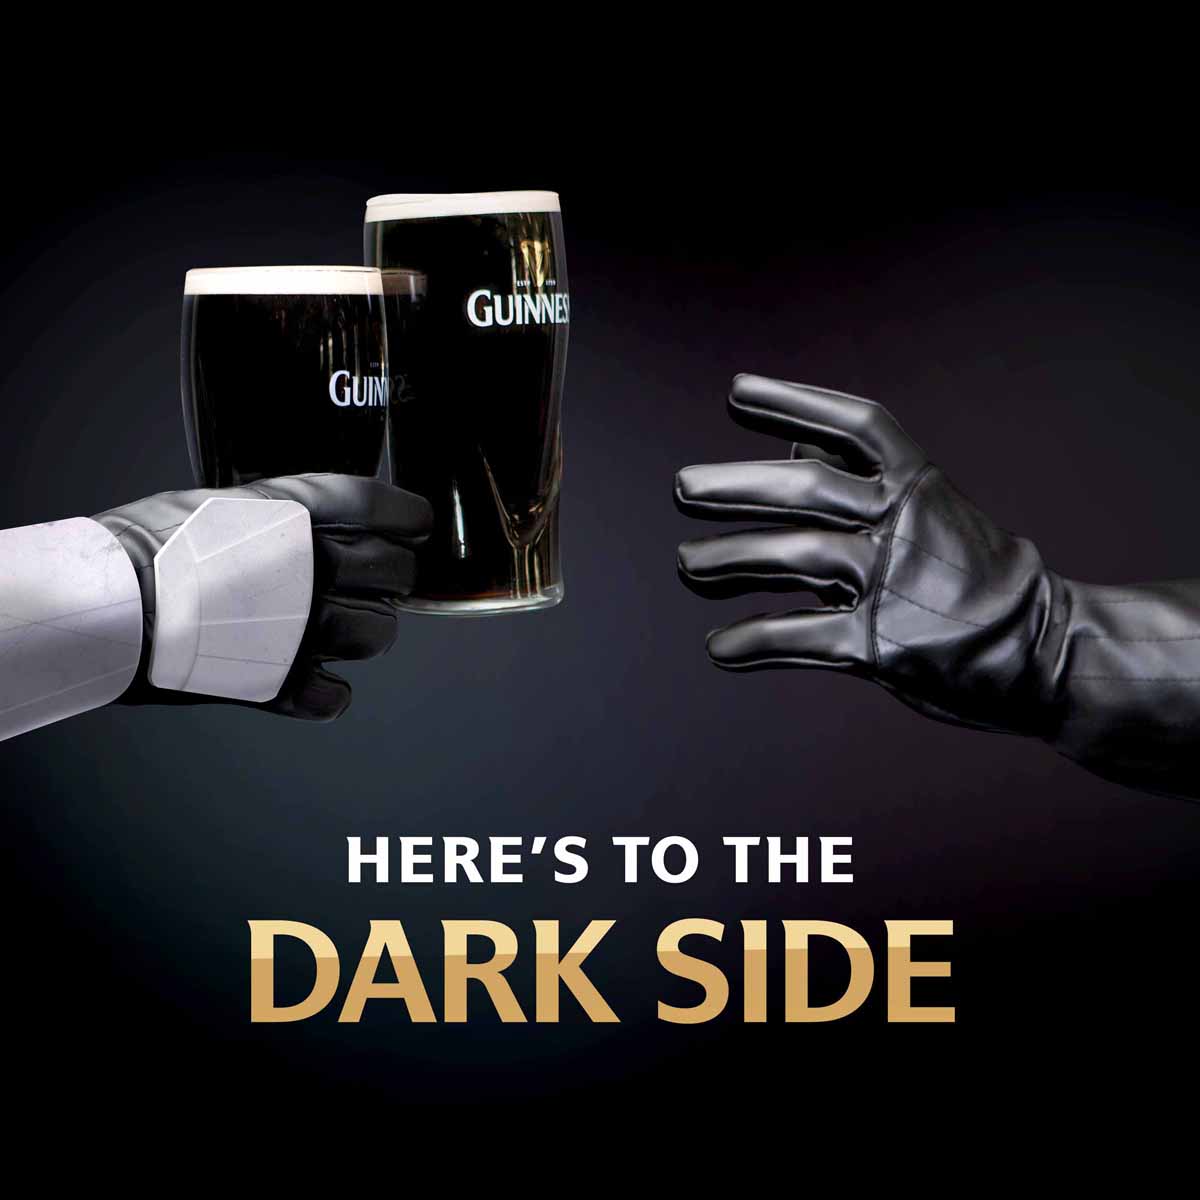 Star-Wars Guinness